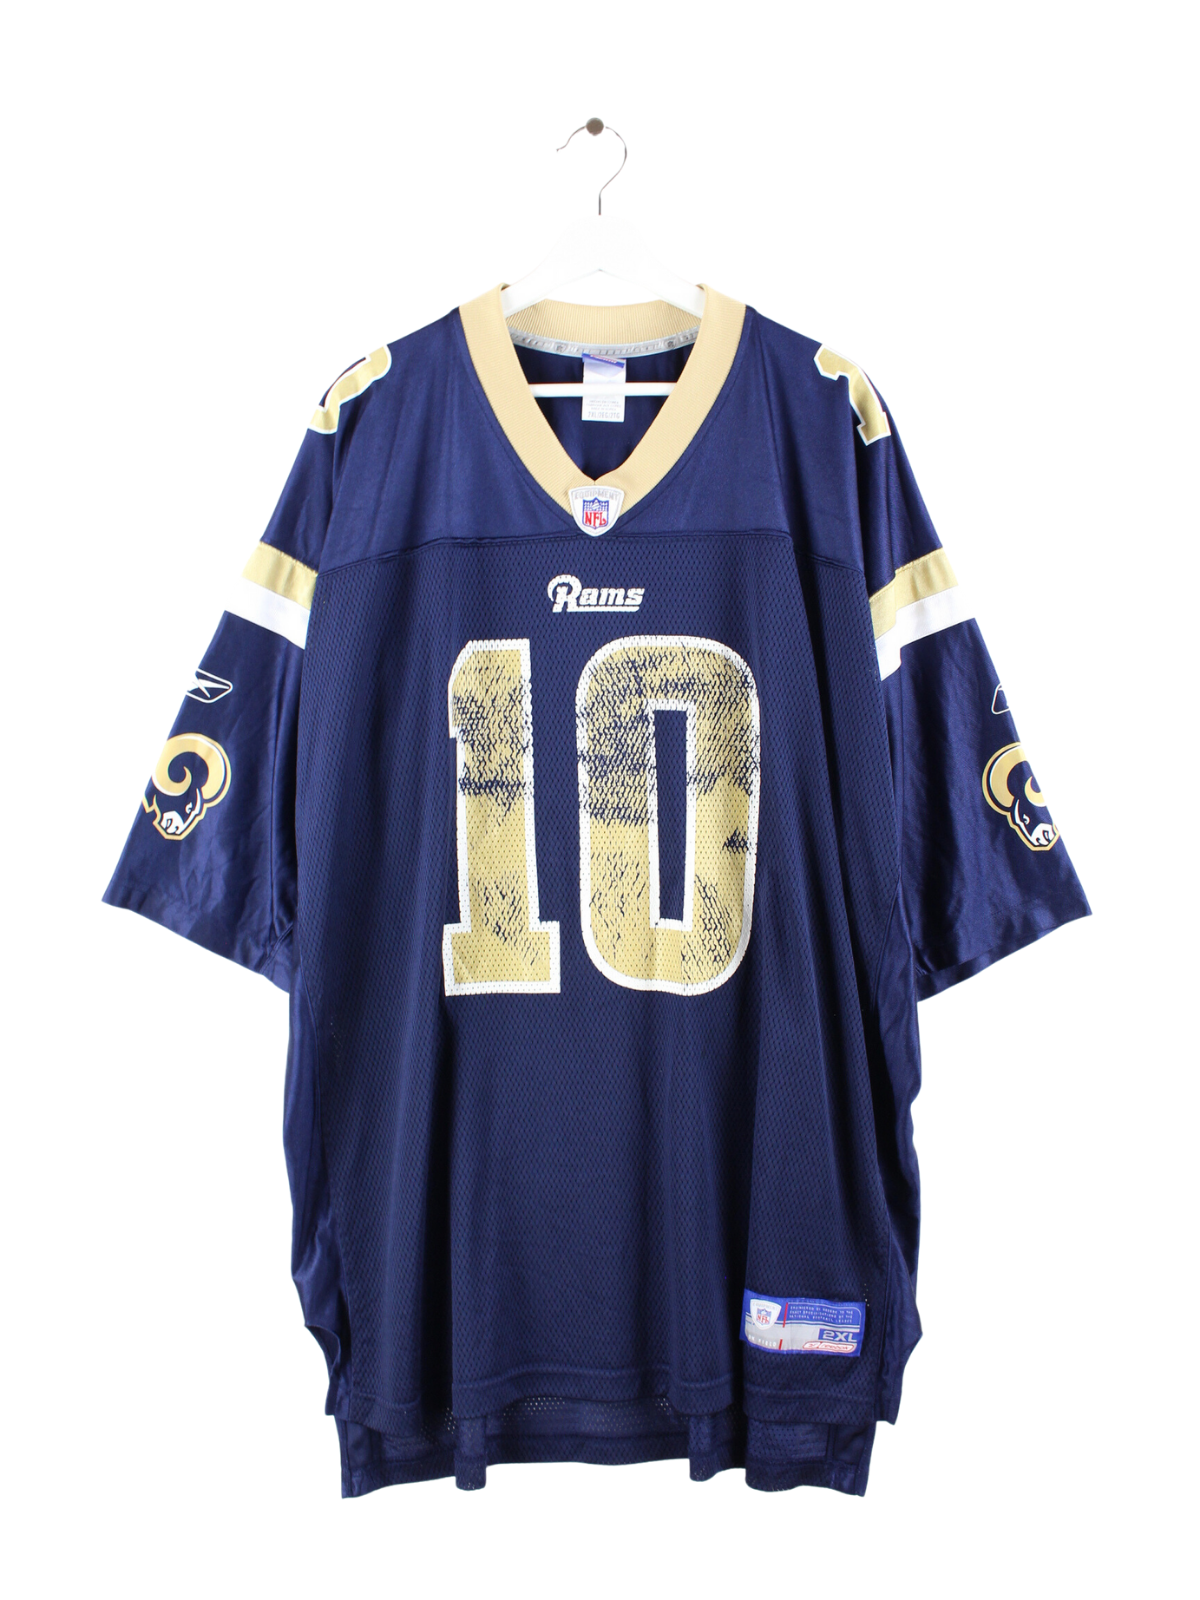 Reebok NFL #8 Bradford St. Louis Rams Blue Gold Jersey Size 48